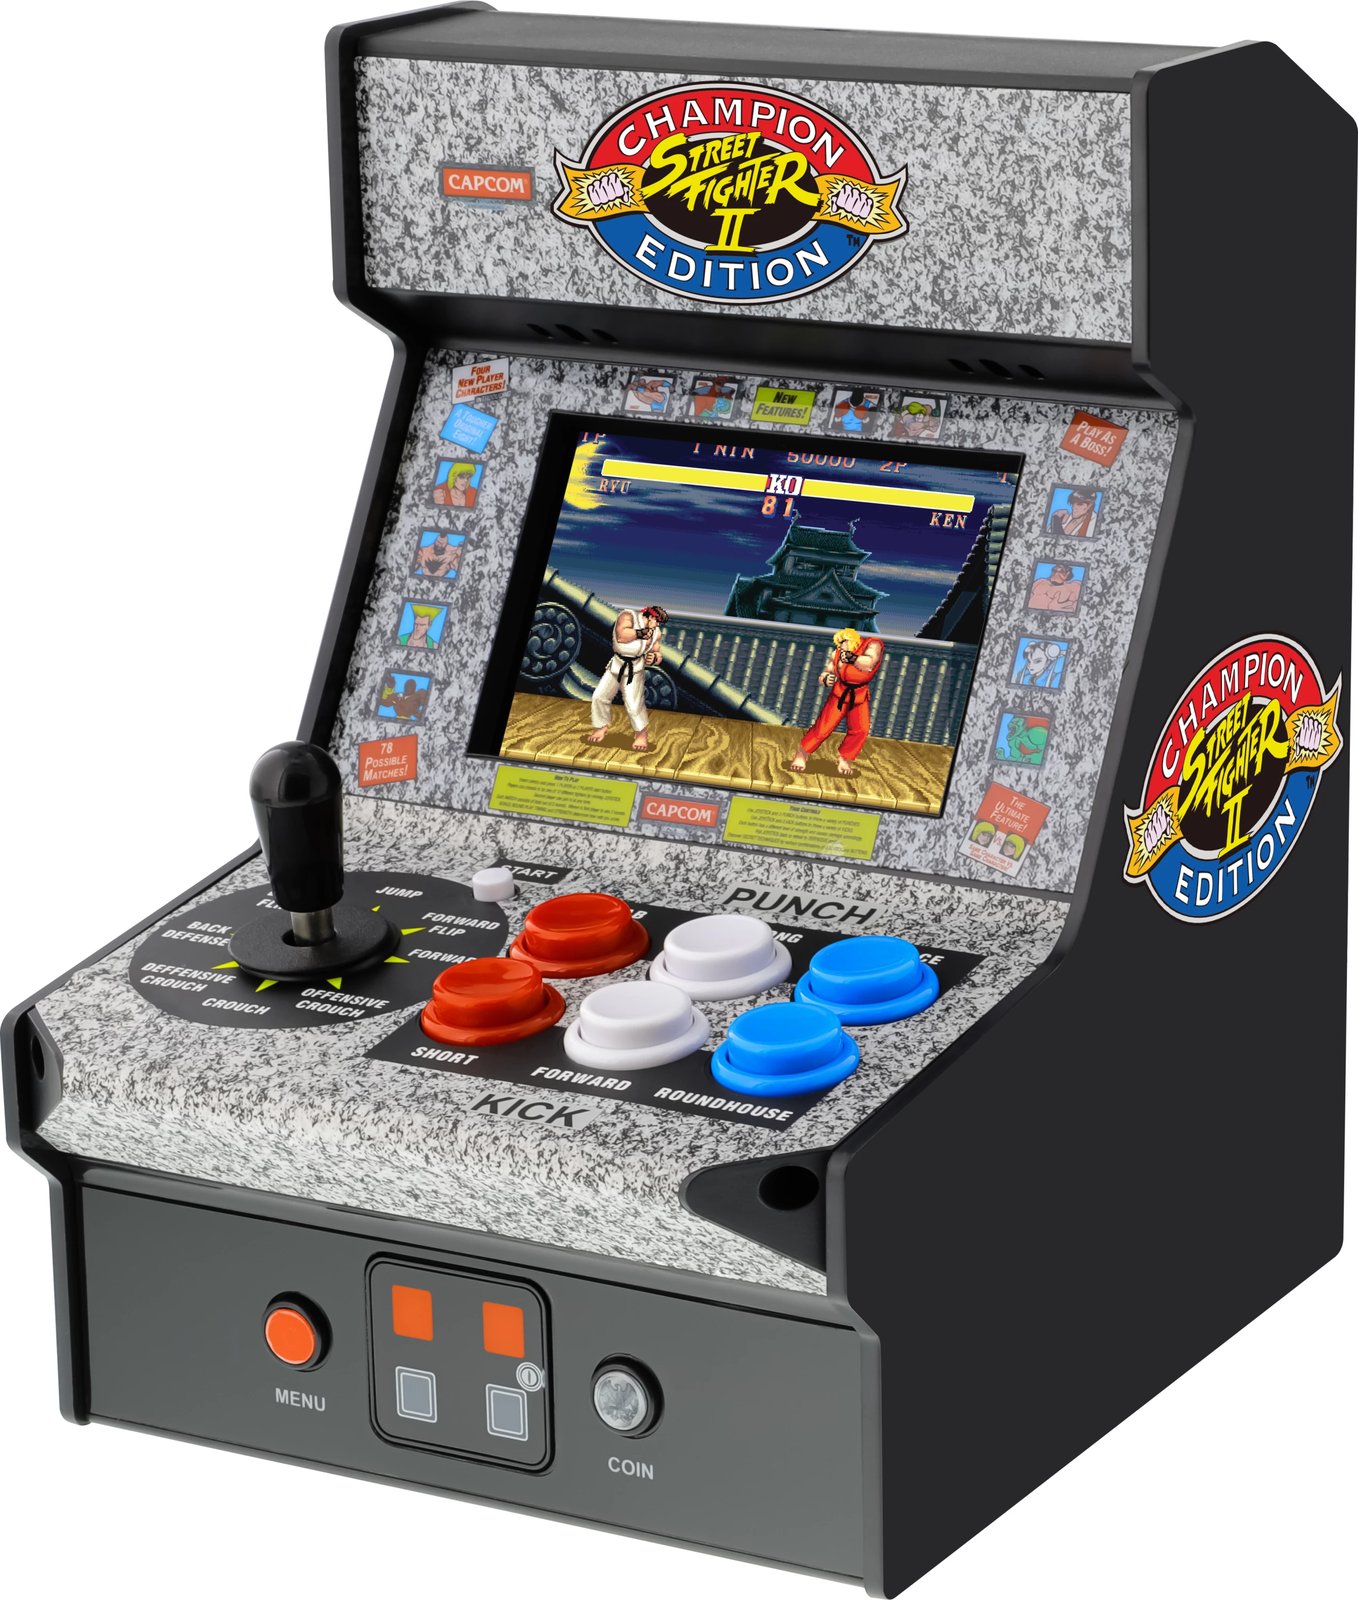 Paisje portative lojërash Fighter 2, My Arcade  Micro Player street, 2,75"